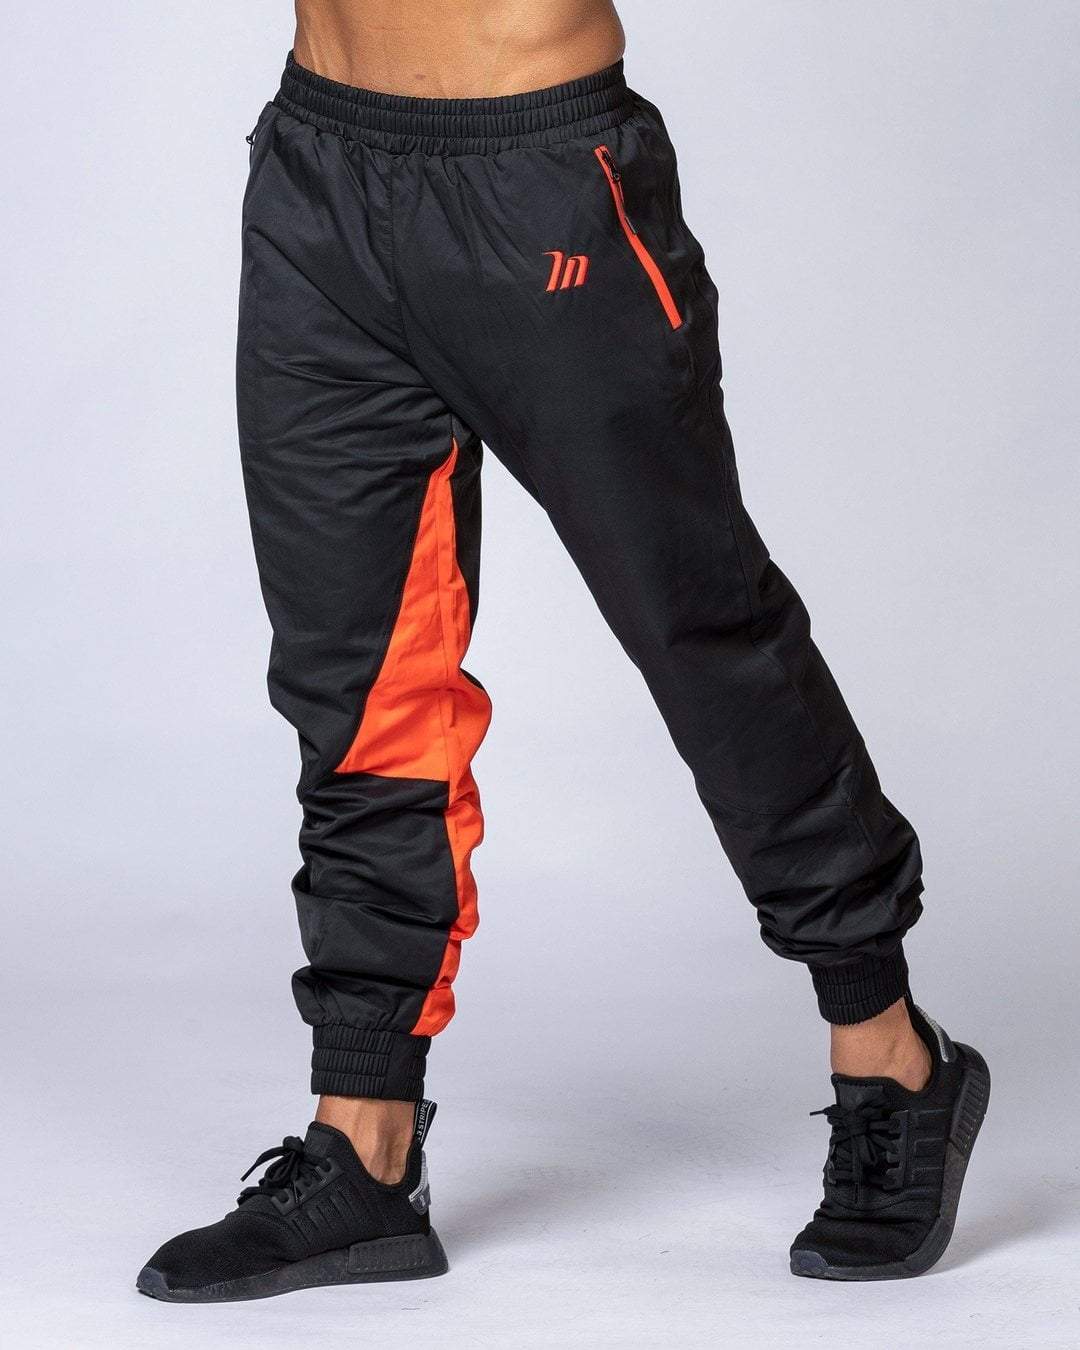 musclenation Unisex Retro Tracksuit Pants - Black / Blood Orange